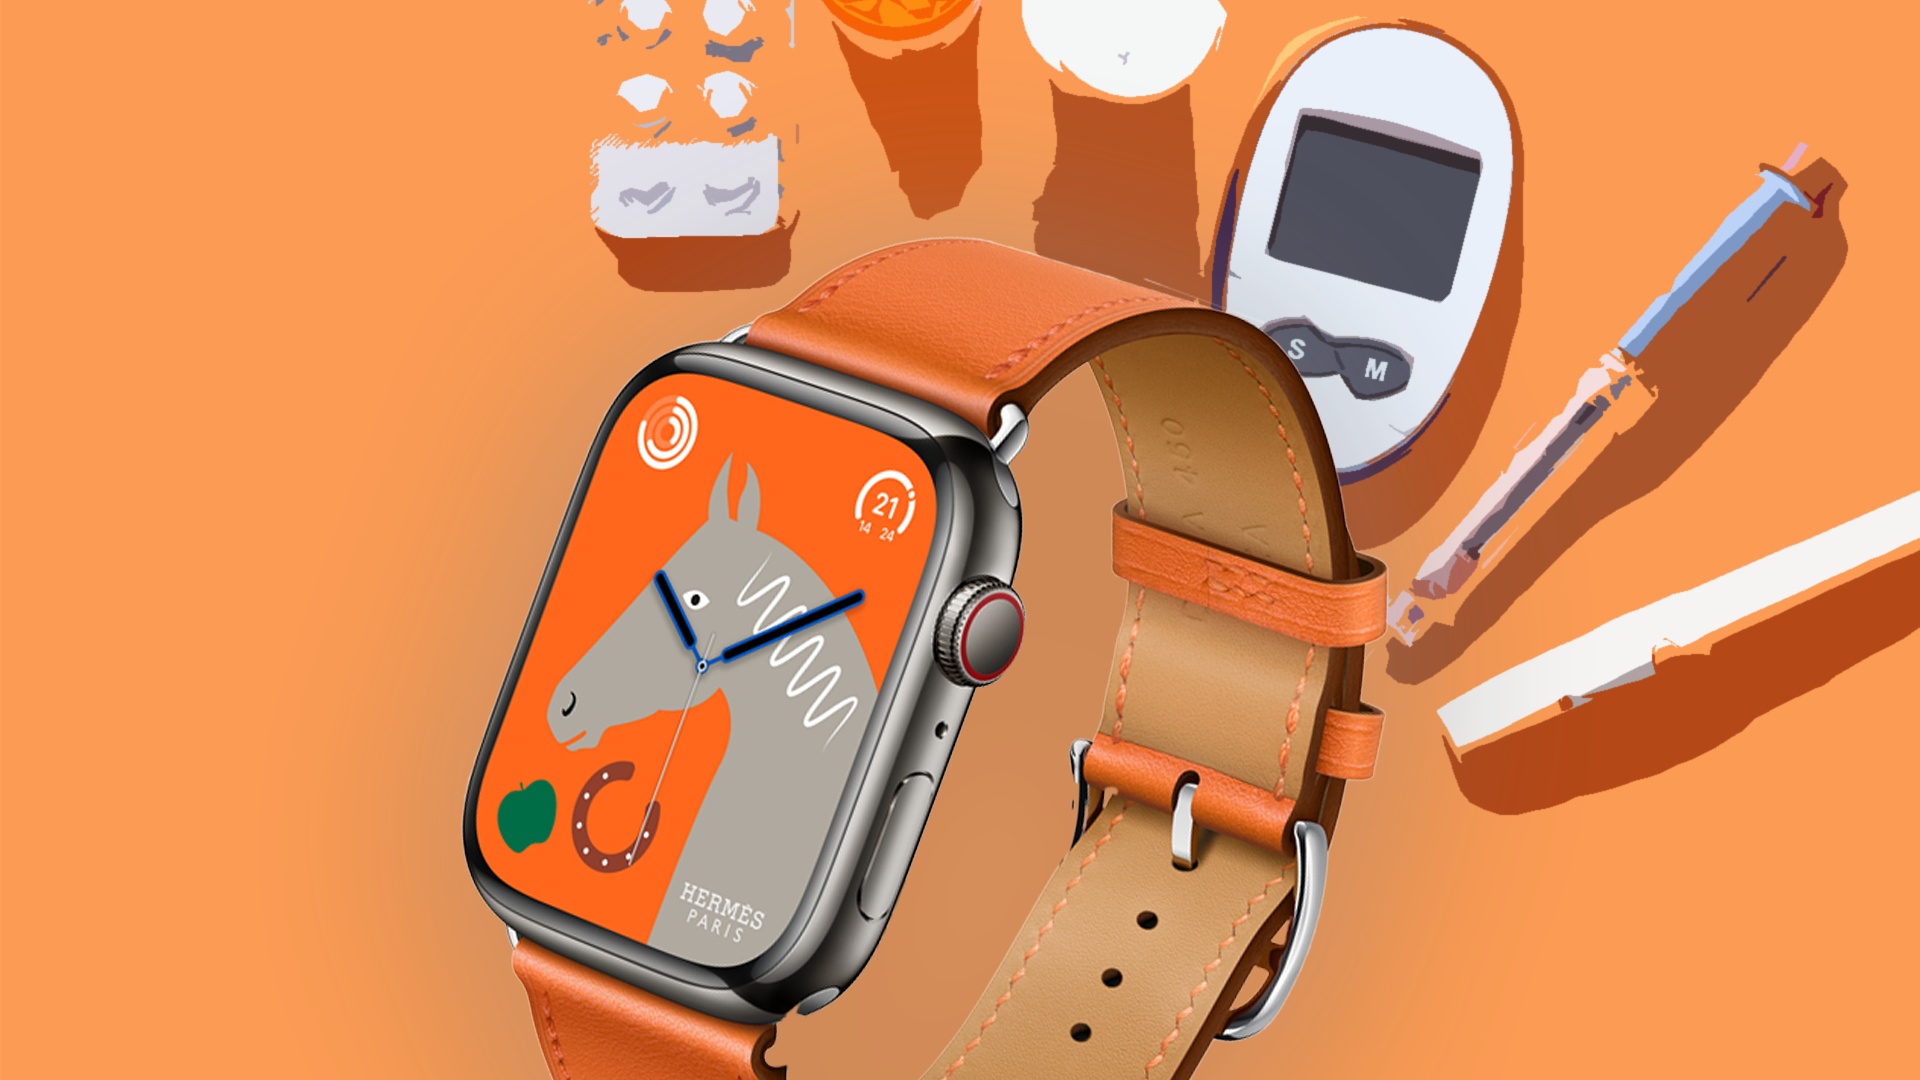 #Diabetes per Apple Watch erkennen: Was wie Science-Fiction klingt, macht einen großen Schritt Richtung Realität